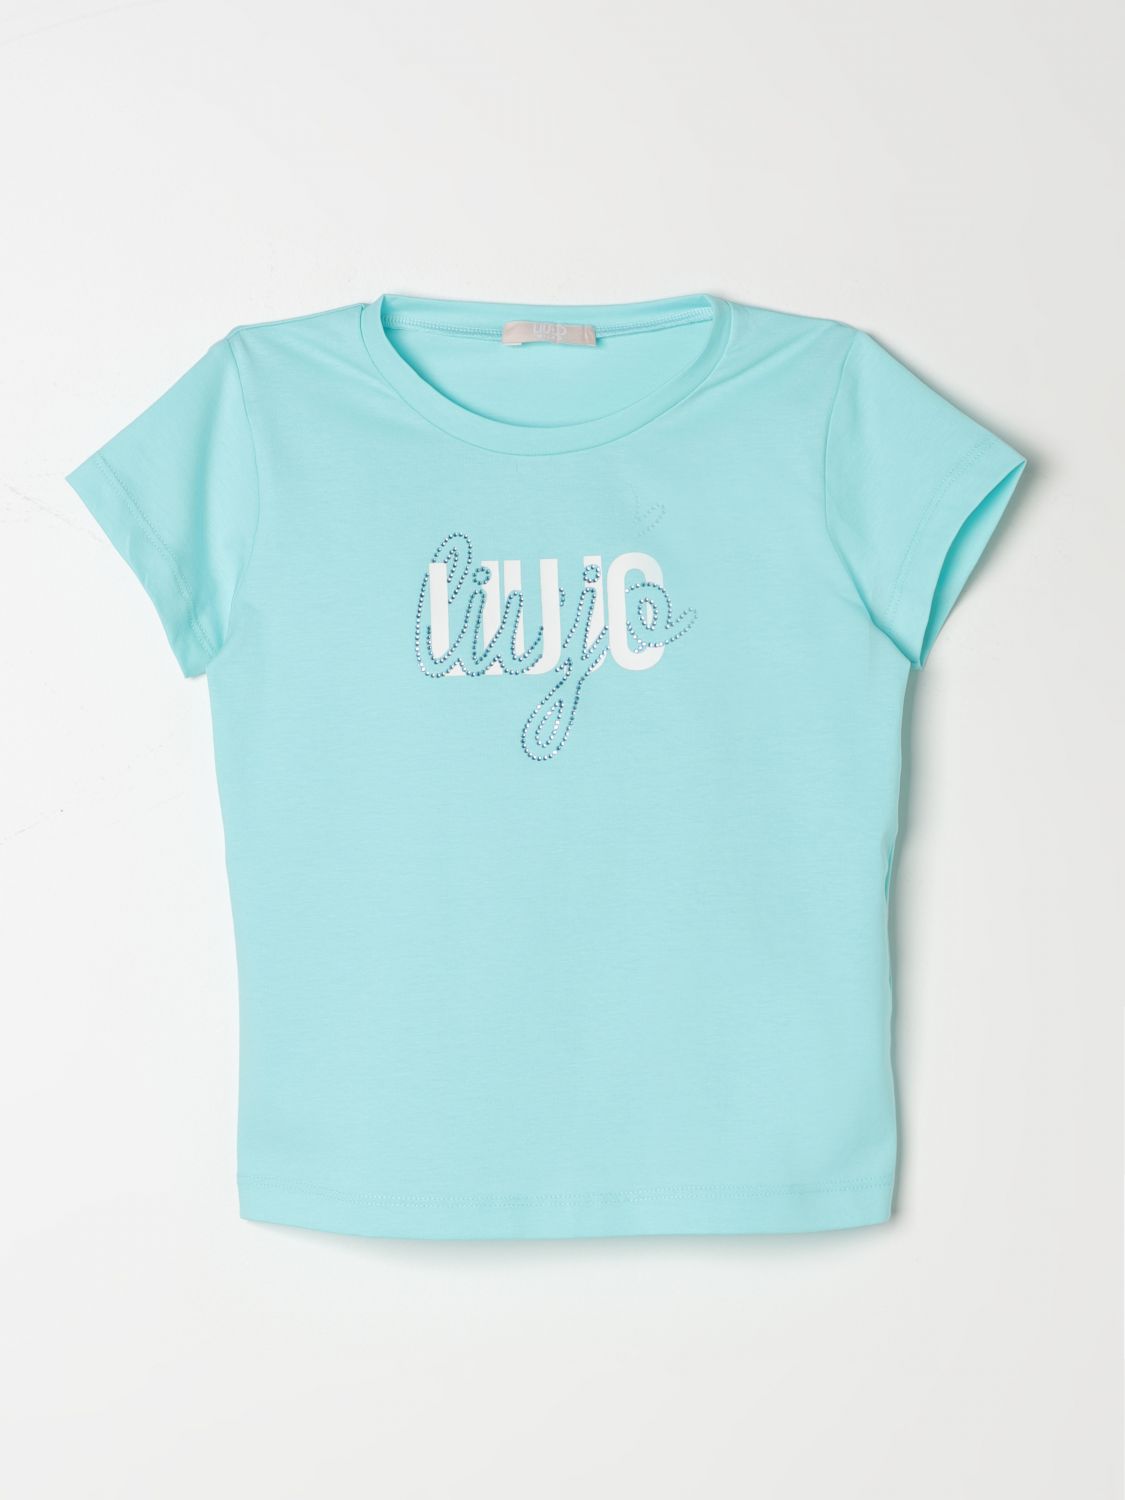 Shop Liu •jo T-shirt Liu Jo Kids Kids Color Turquoise